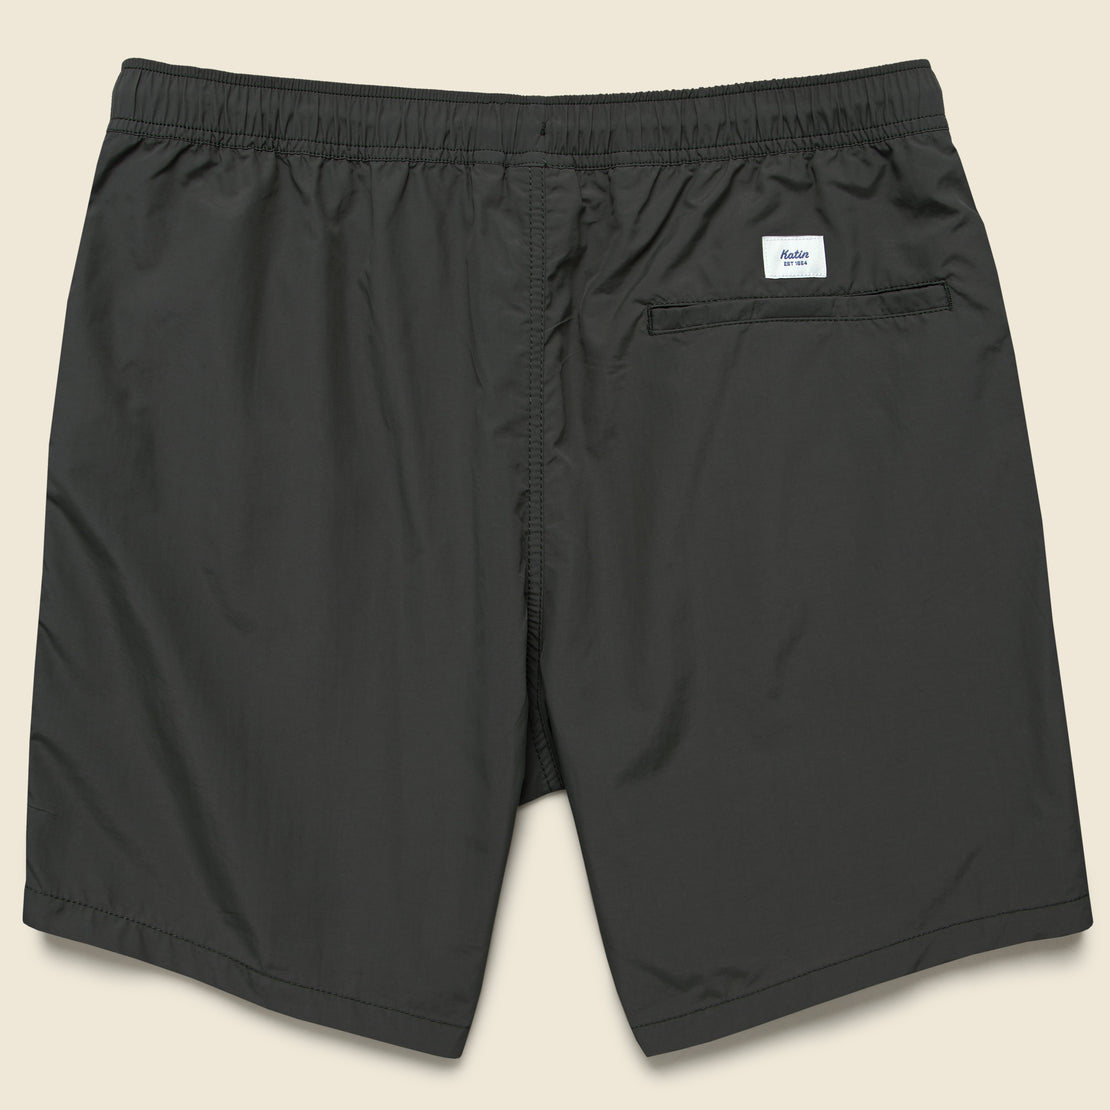 Trails Nylon Short - Black Wash - Katin - STAG Provisions - Shorts - Lounge